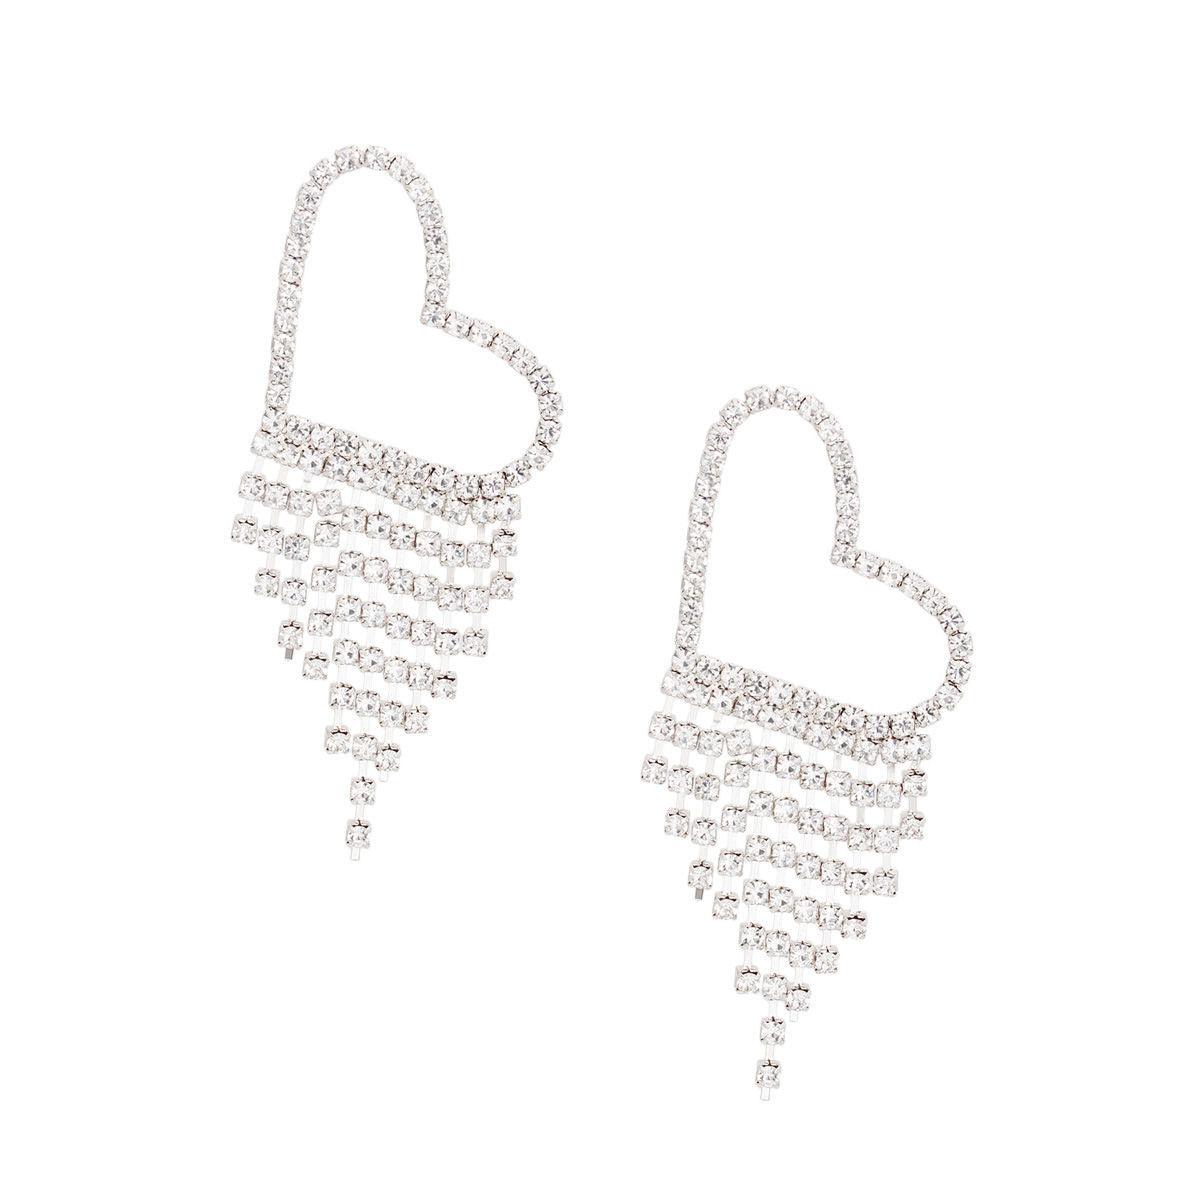 Luxurious Heart Silver Earrings with Rhinestone Fringe – Shop Fashion Jewelry Now